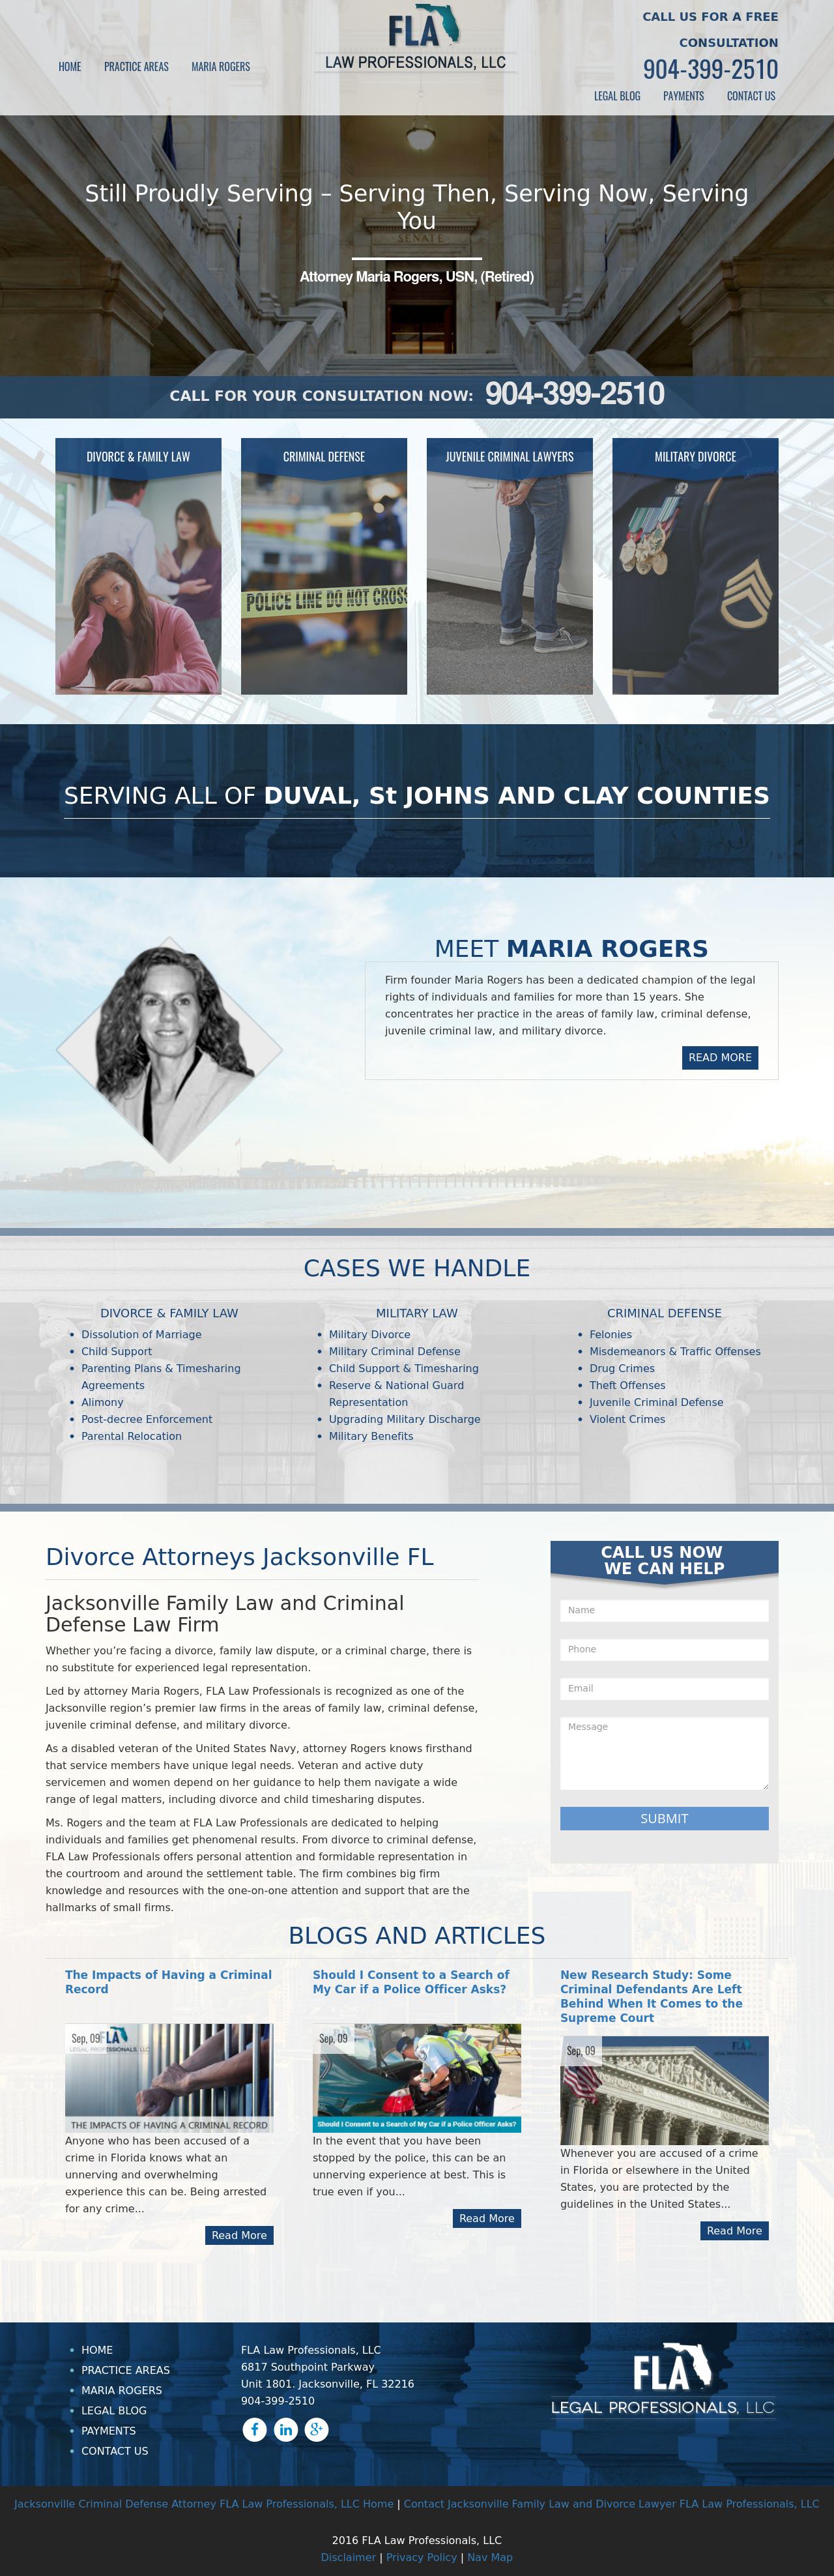 FLA Law Professionals, L.L.C. - Jacksonville FL Lawyers